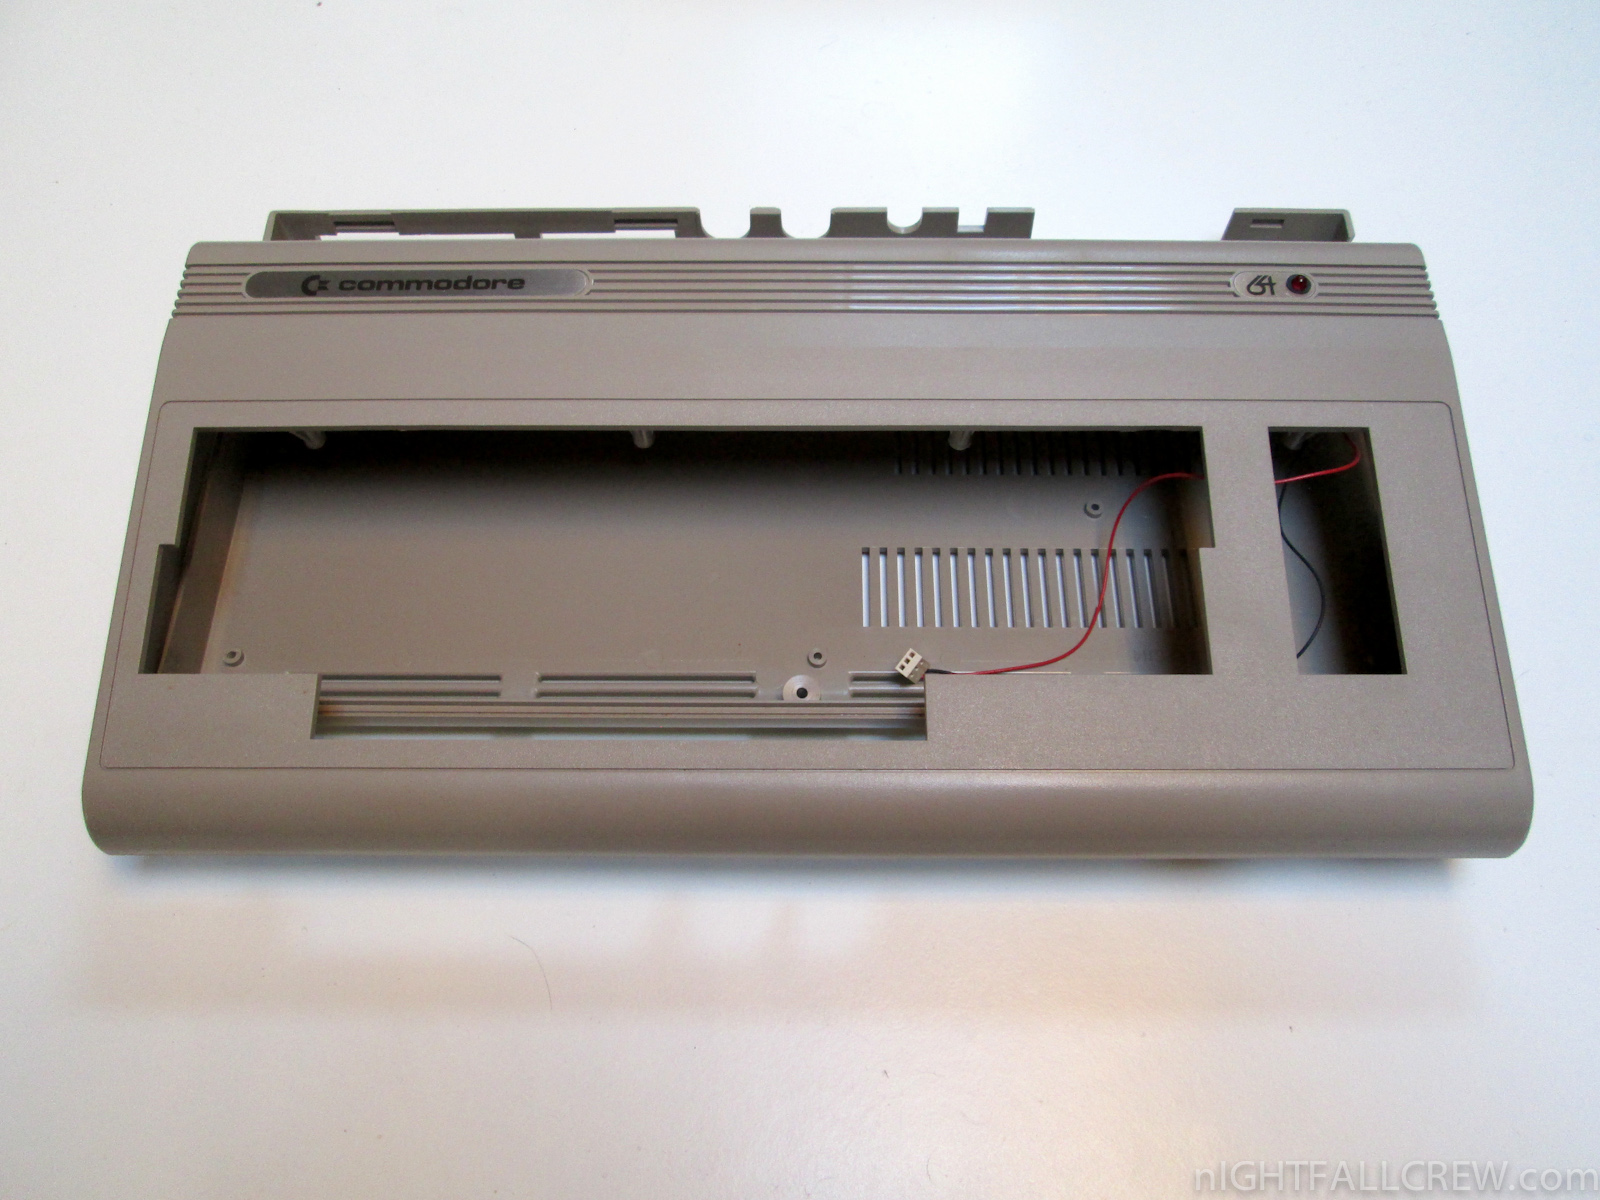 технологии второй половины 20 века: Commodore 64